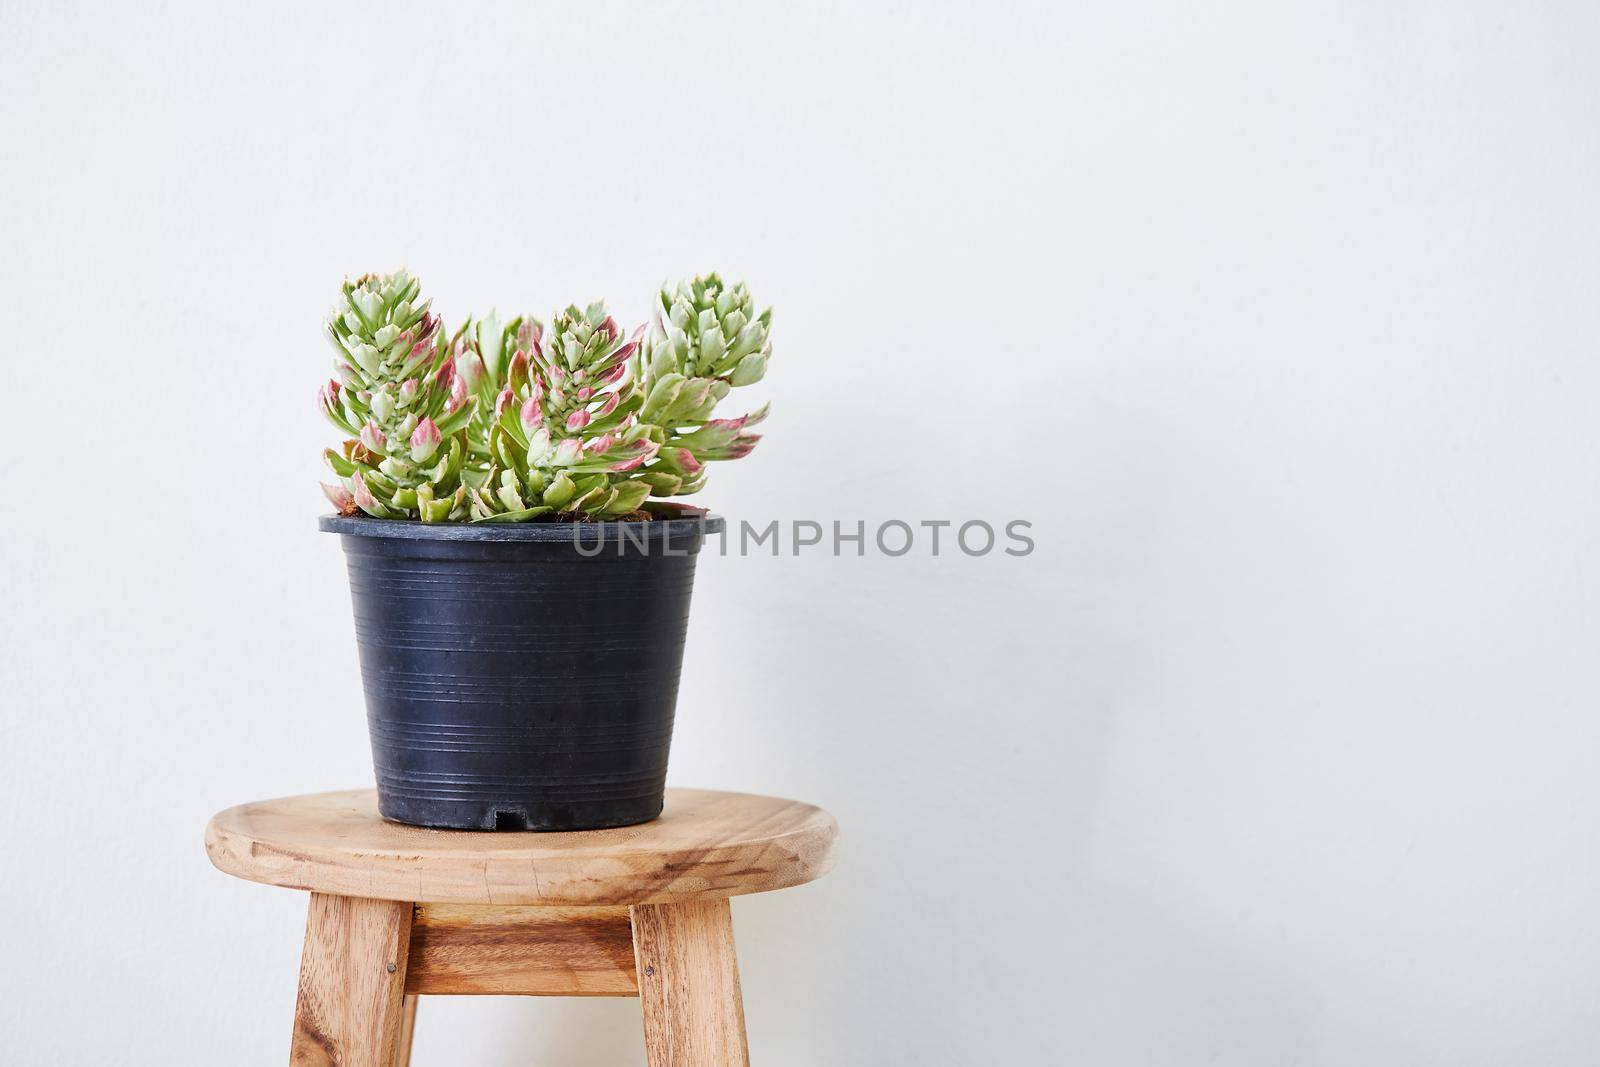 Monadenium on pot  with white background. Minimalist photo